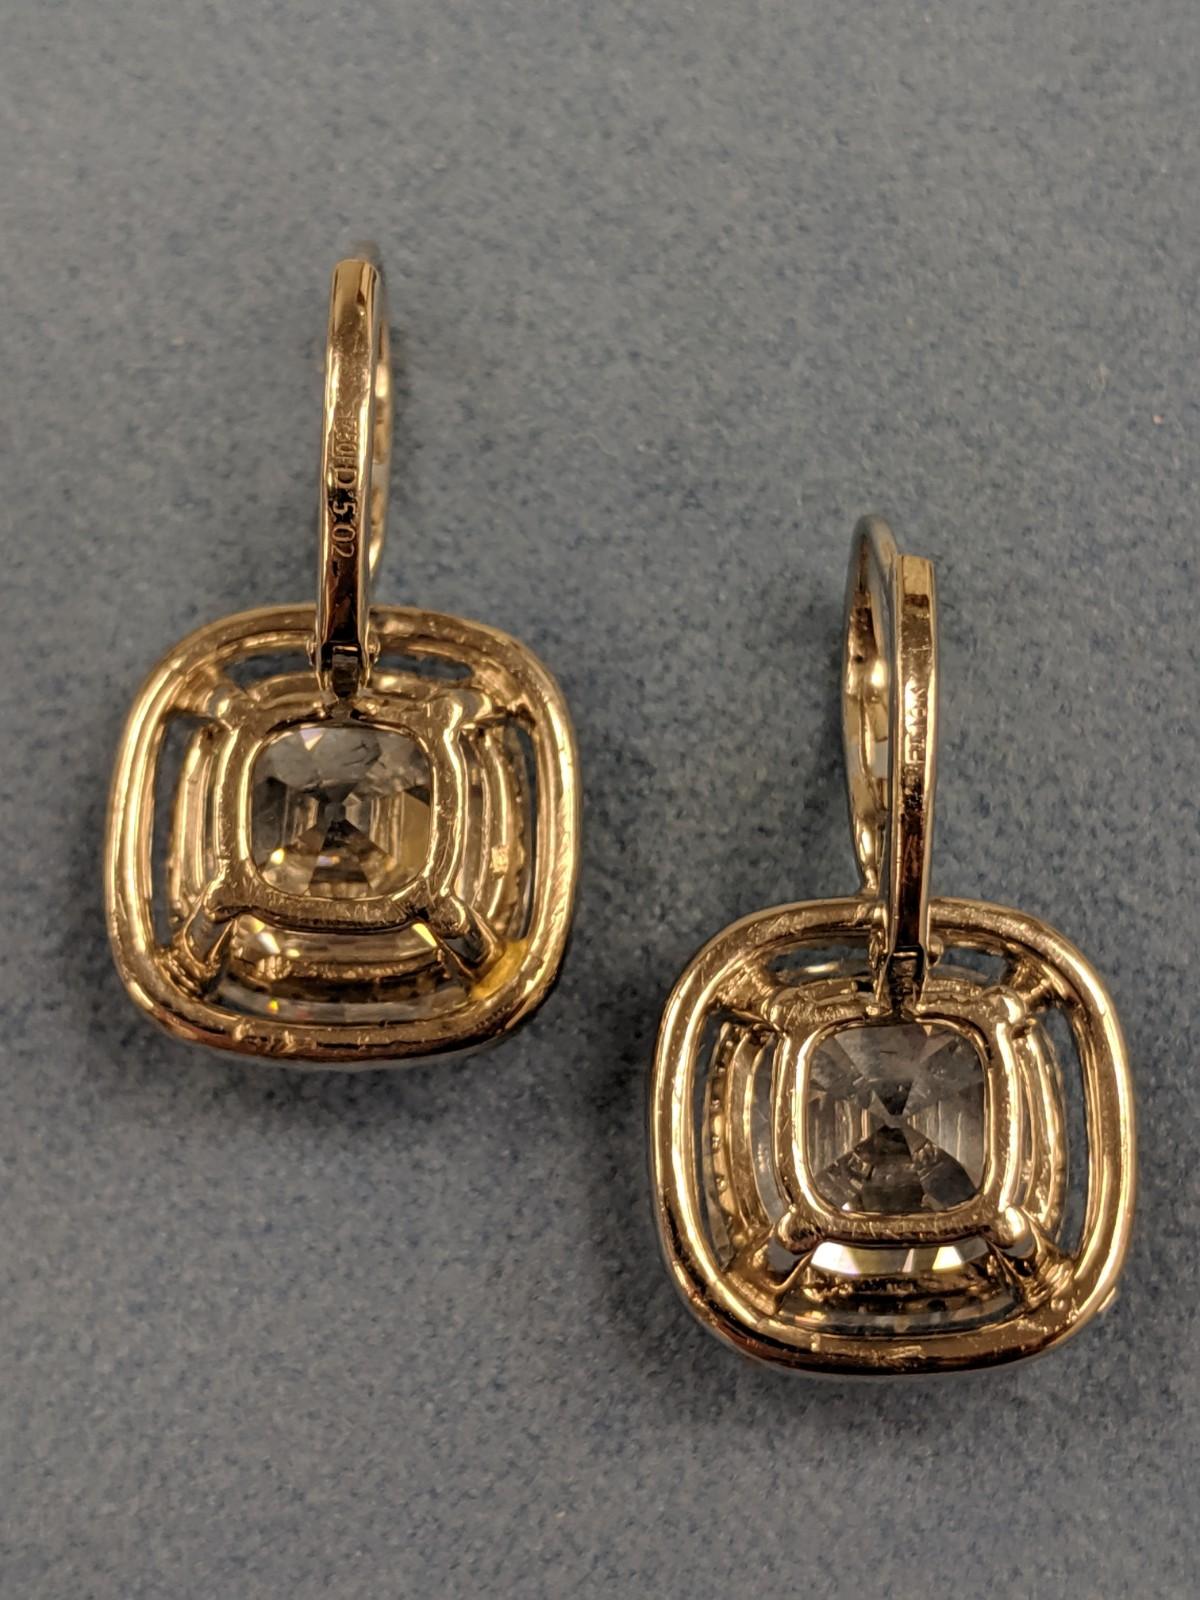 Contemporary 10 Carat Antique Cut Cushion Diamond Earrings in Platinum, GIA